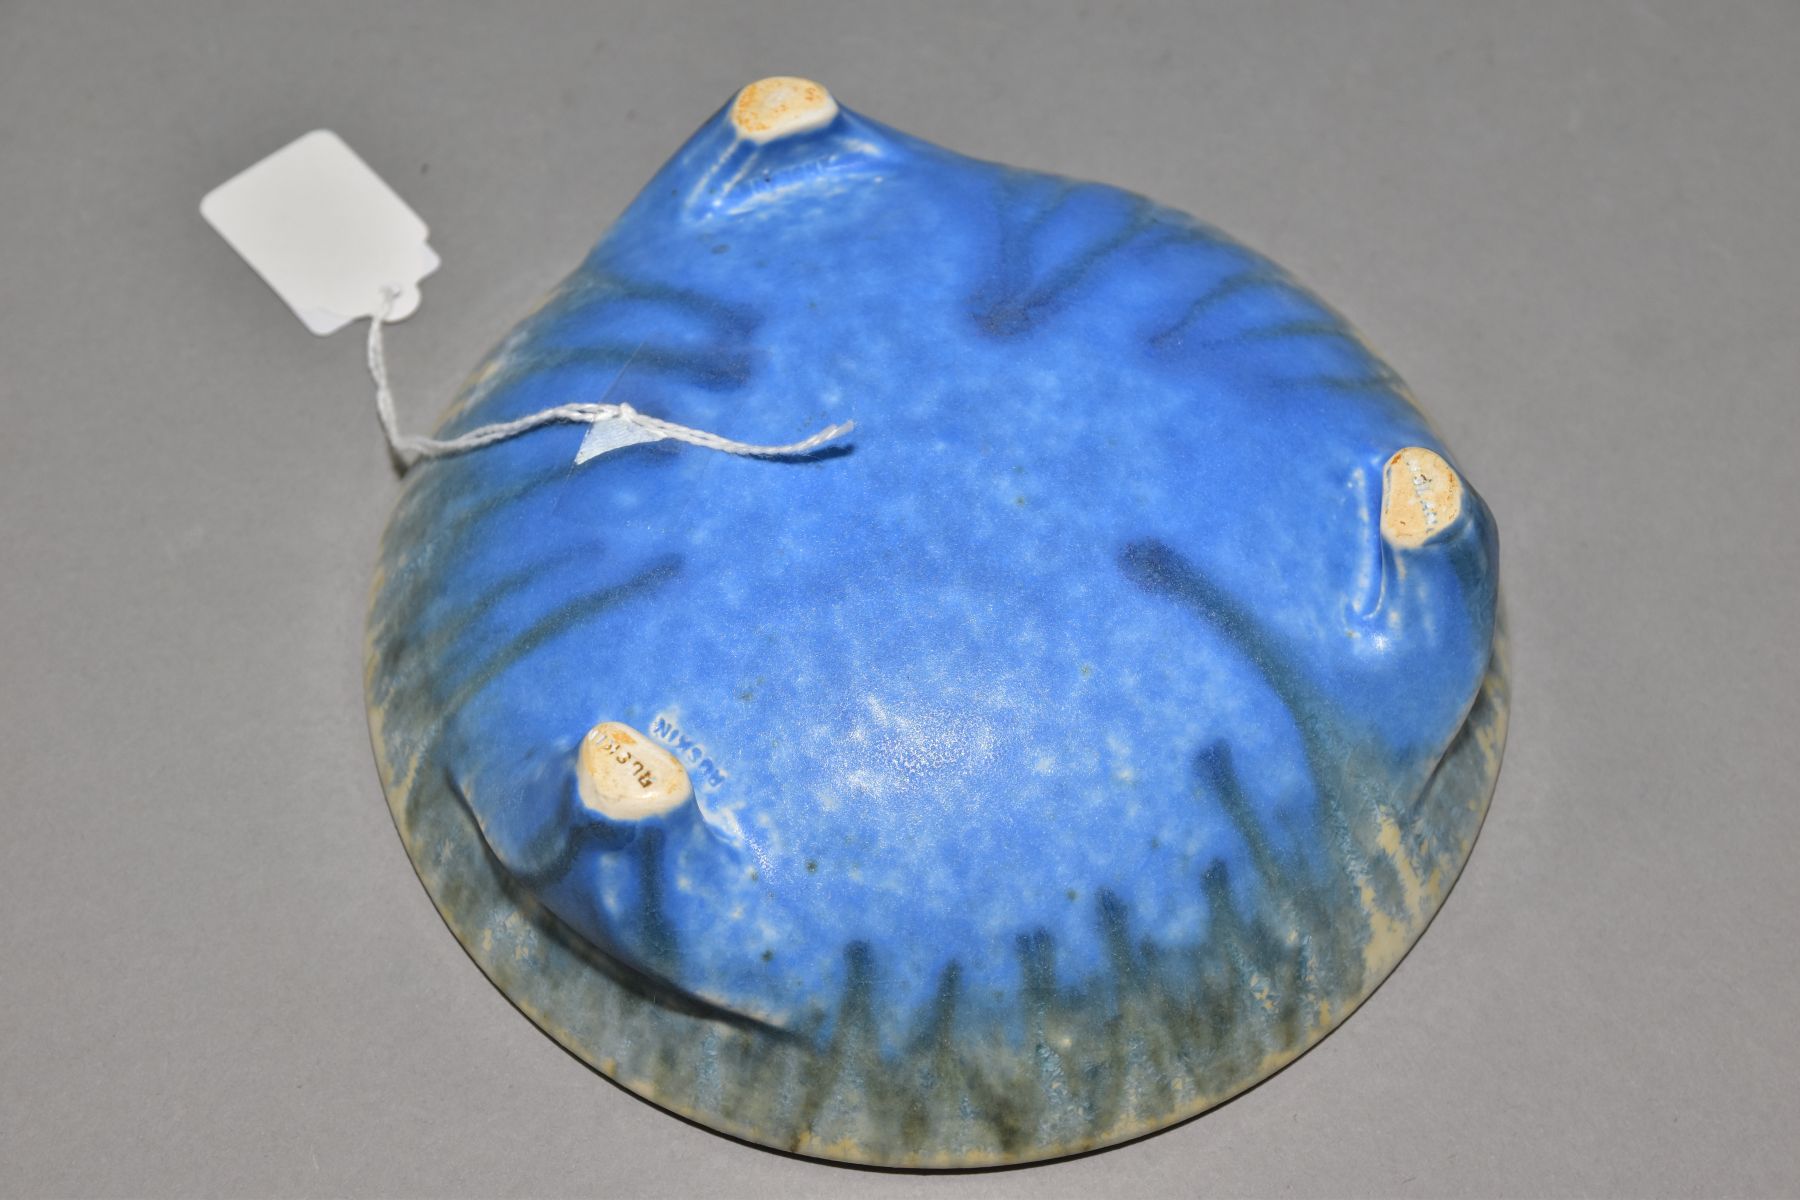 RUSKIN POTTERY, a shallow bowl raised on three feet, blue and orange crystalline glaze over white - Image 4 of 4